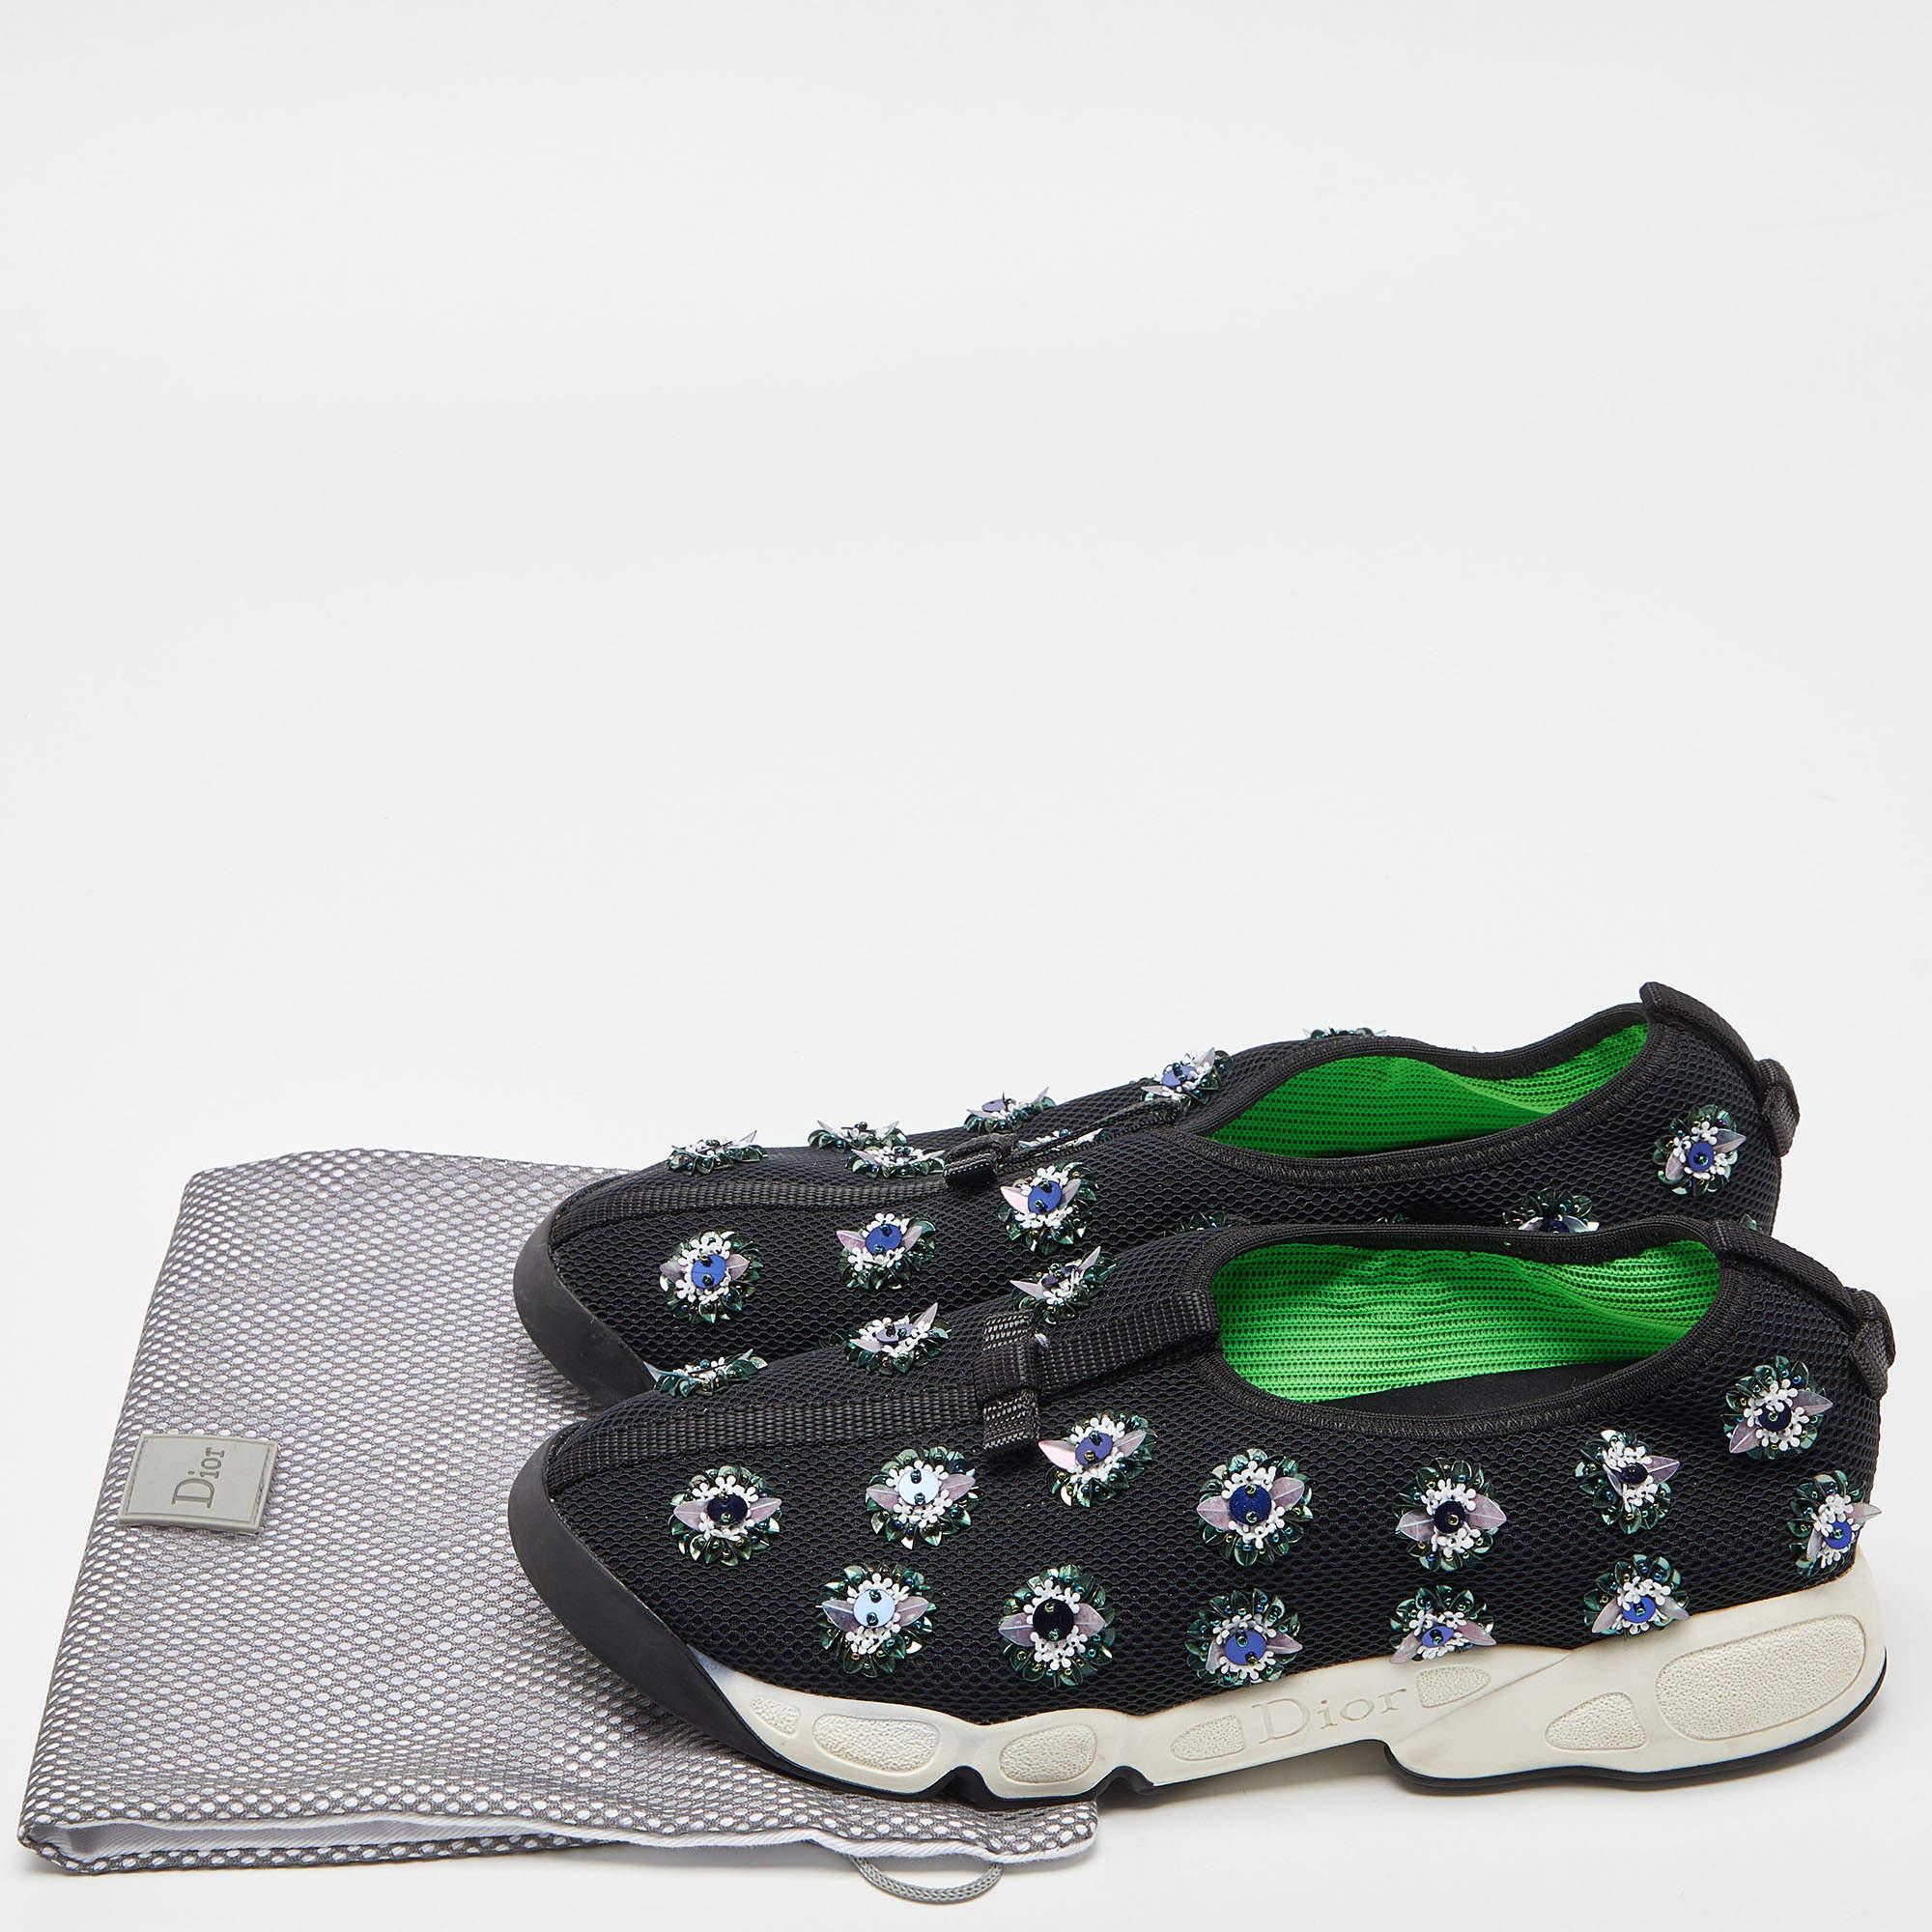 Dior Black Mesh Fusion Floral Embellished Slip On Sneakers Size 39.5 For Sale 4